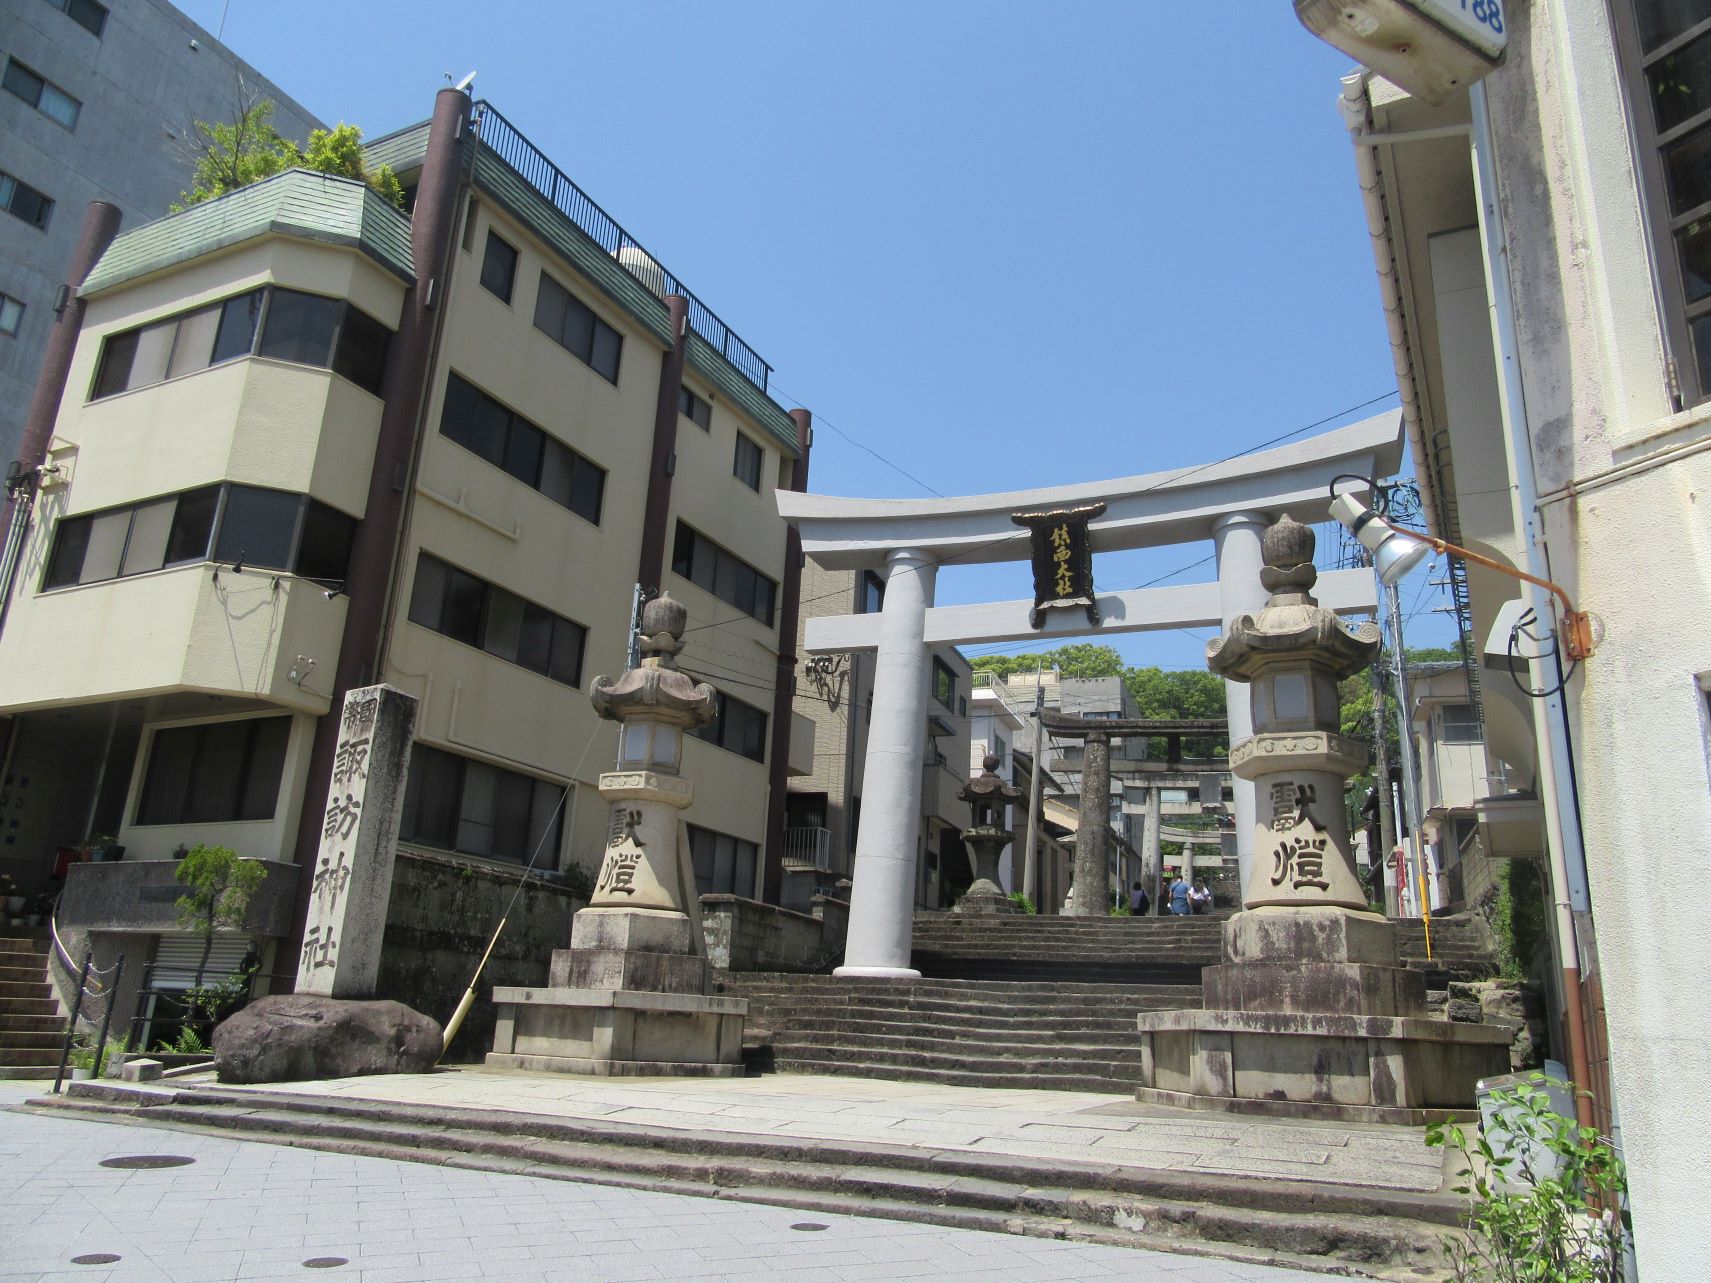 Suwa Shrine, the most famous shrine in Nagasaki.